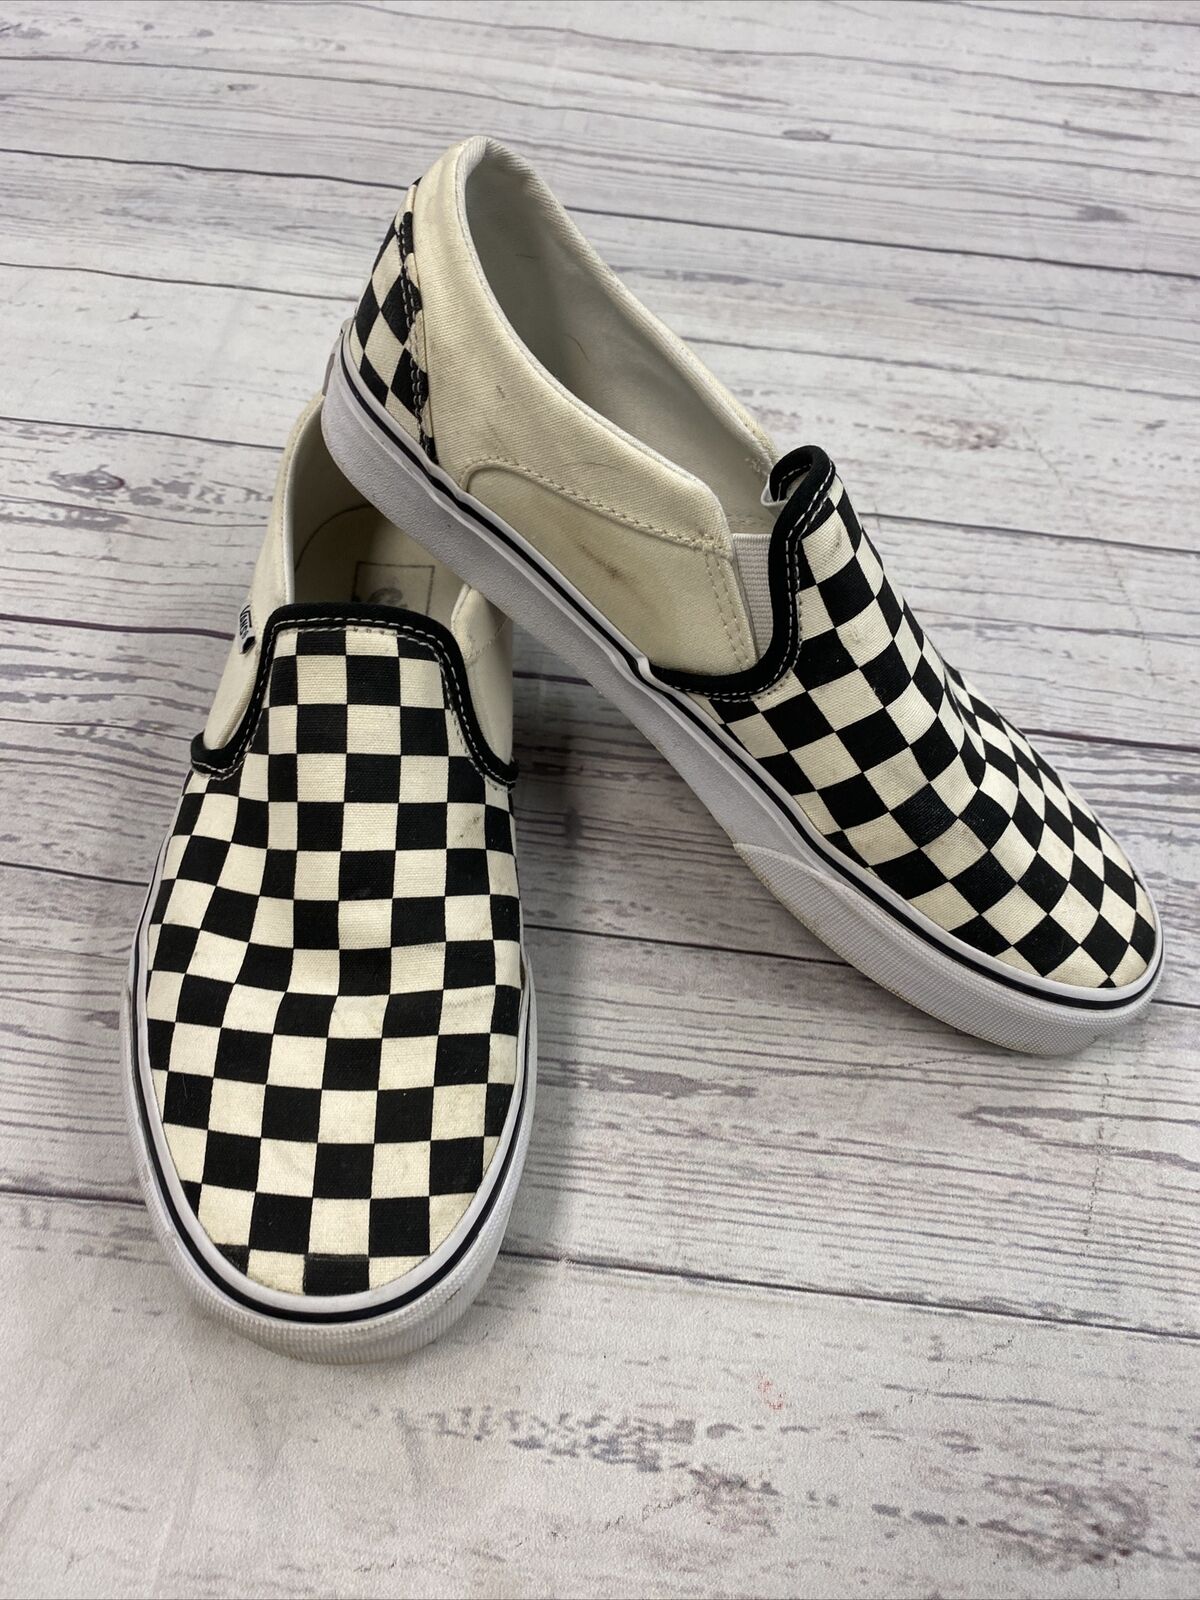 VANS Classic Slip On White/Black Checkered Canvas Skate Shoes Women’s 9.5*